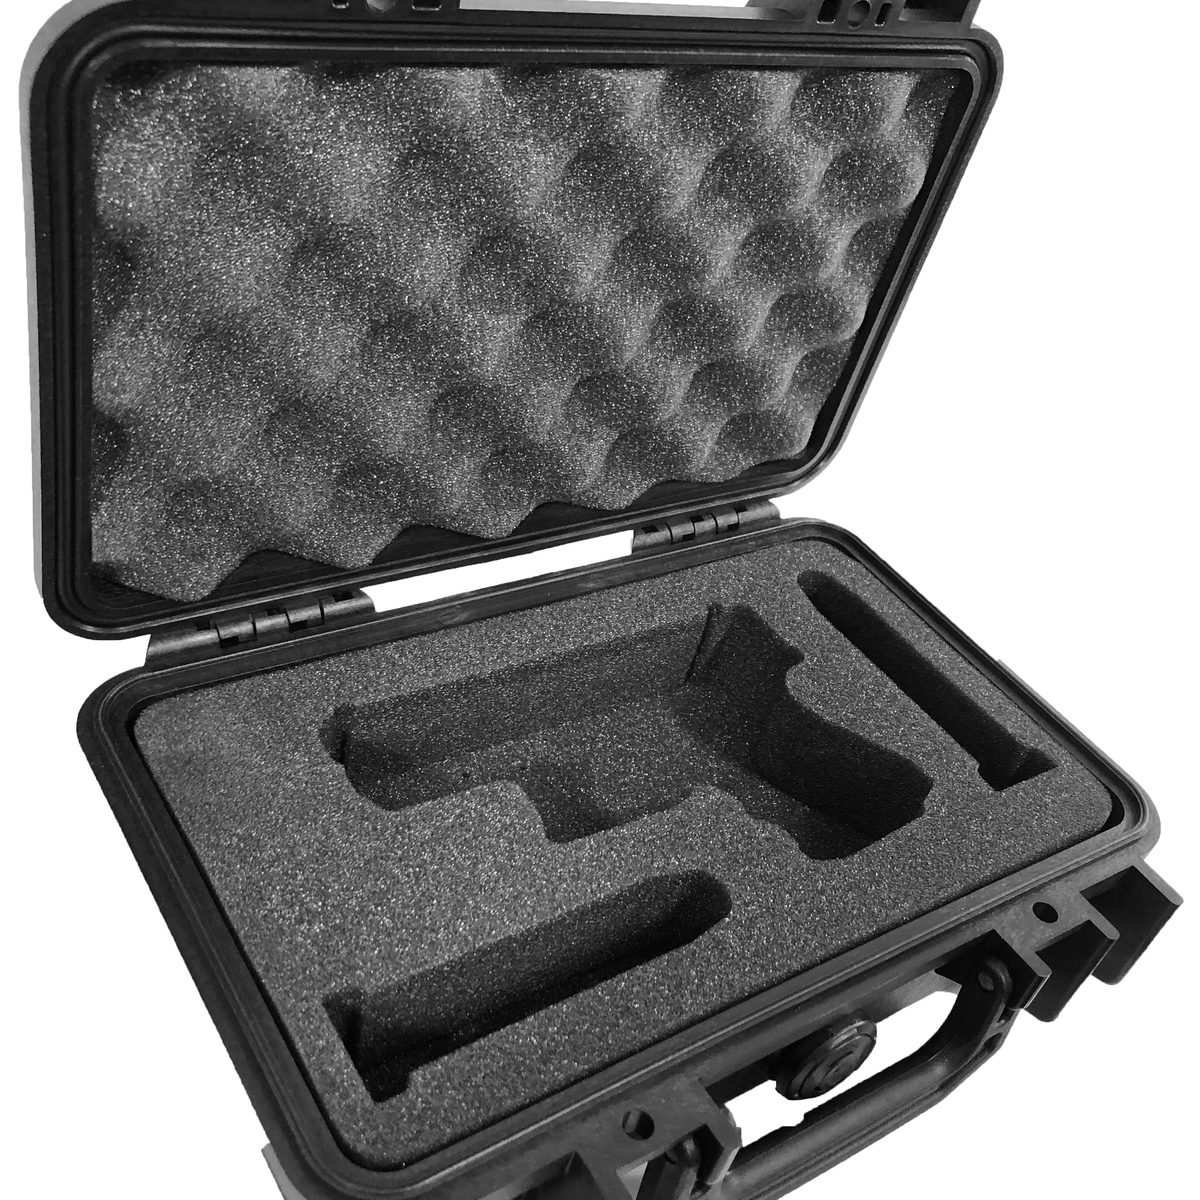  Pelican Case 1170 Custom Foam Insert for Smith & Wesson Shield  9mm & Magazine (Foam Only) : Sports & Outdoors